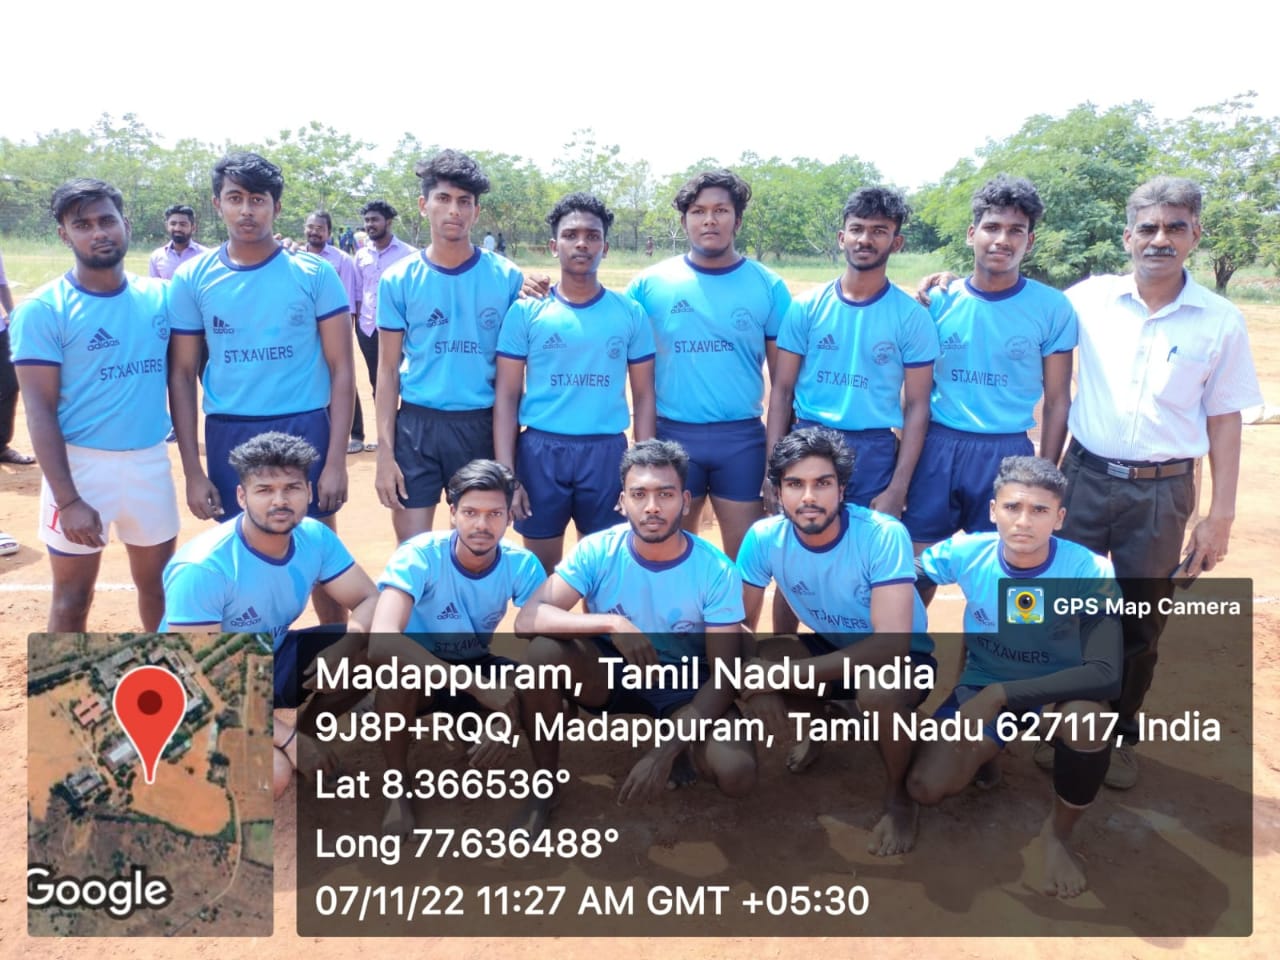 Our Kabaddi Team